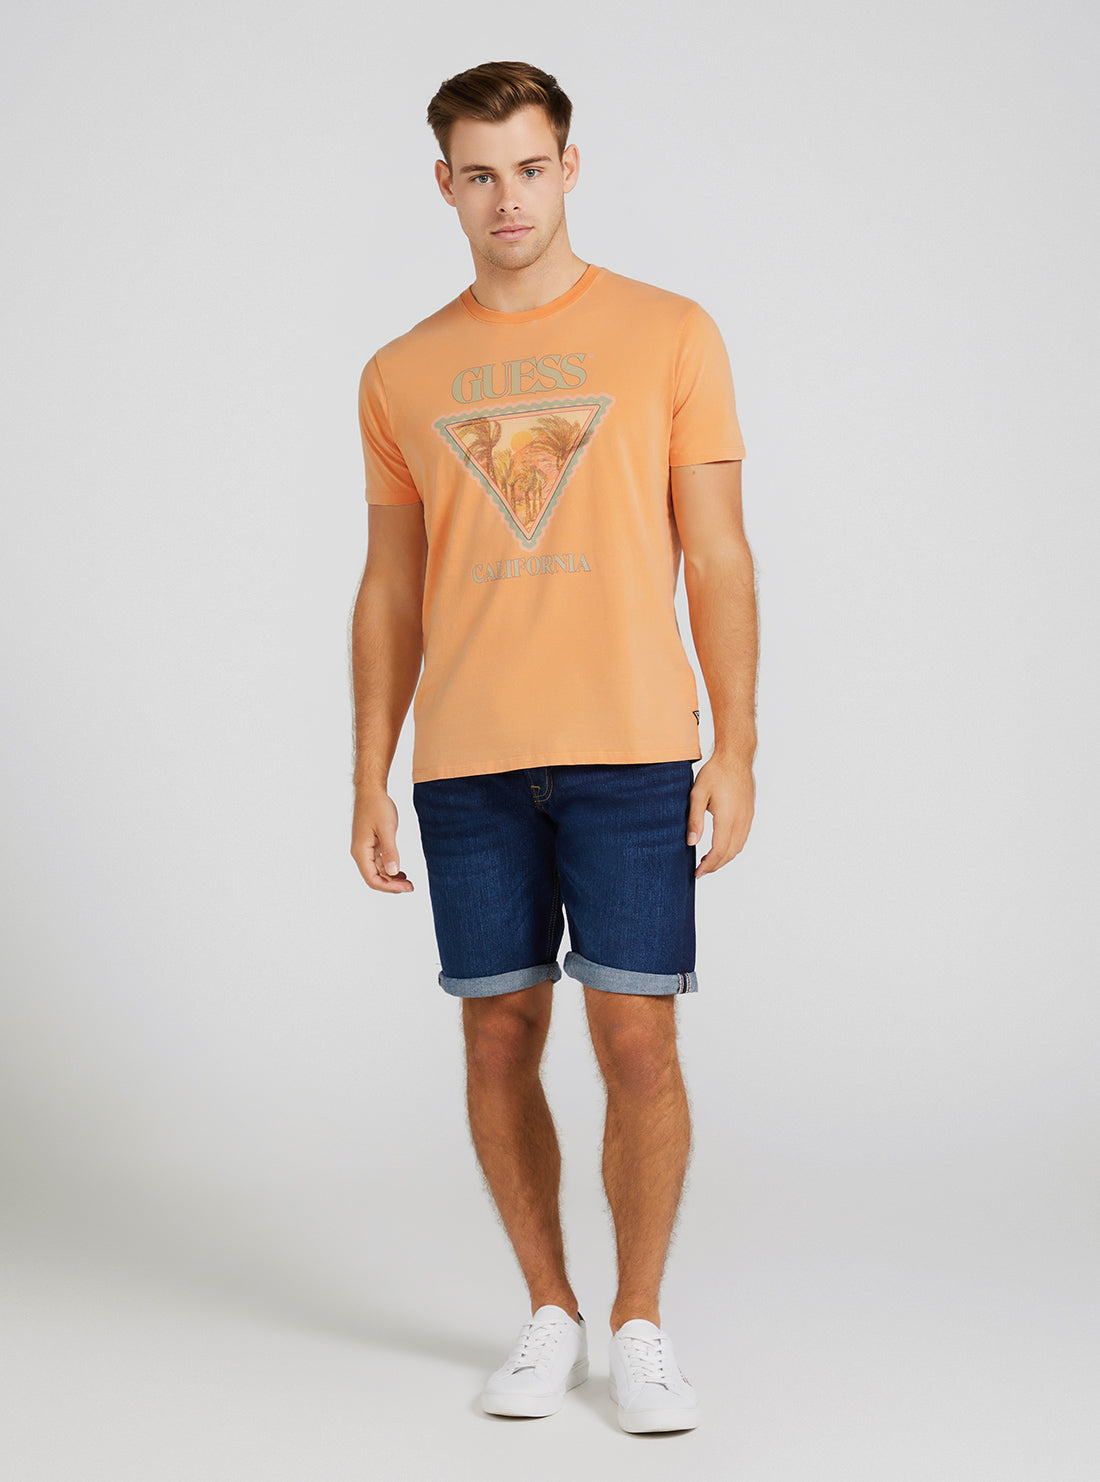 GUESS Men's Eco Peach Multi Desert Triangle Logo T-Shirt M3YI65KBDL0 Full View